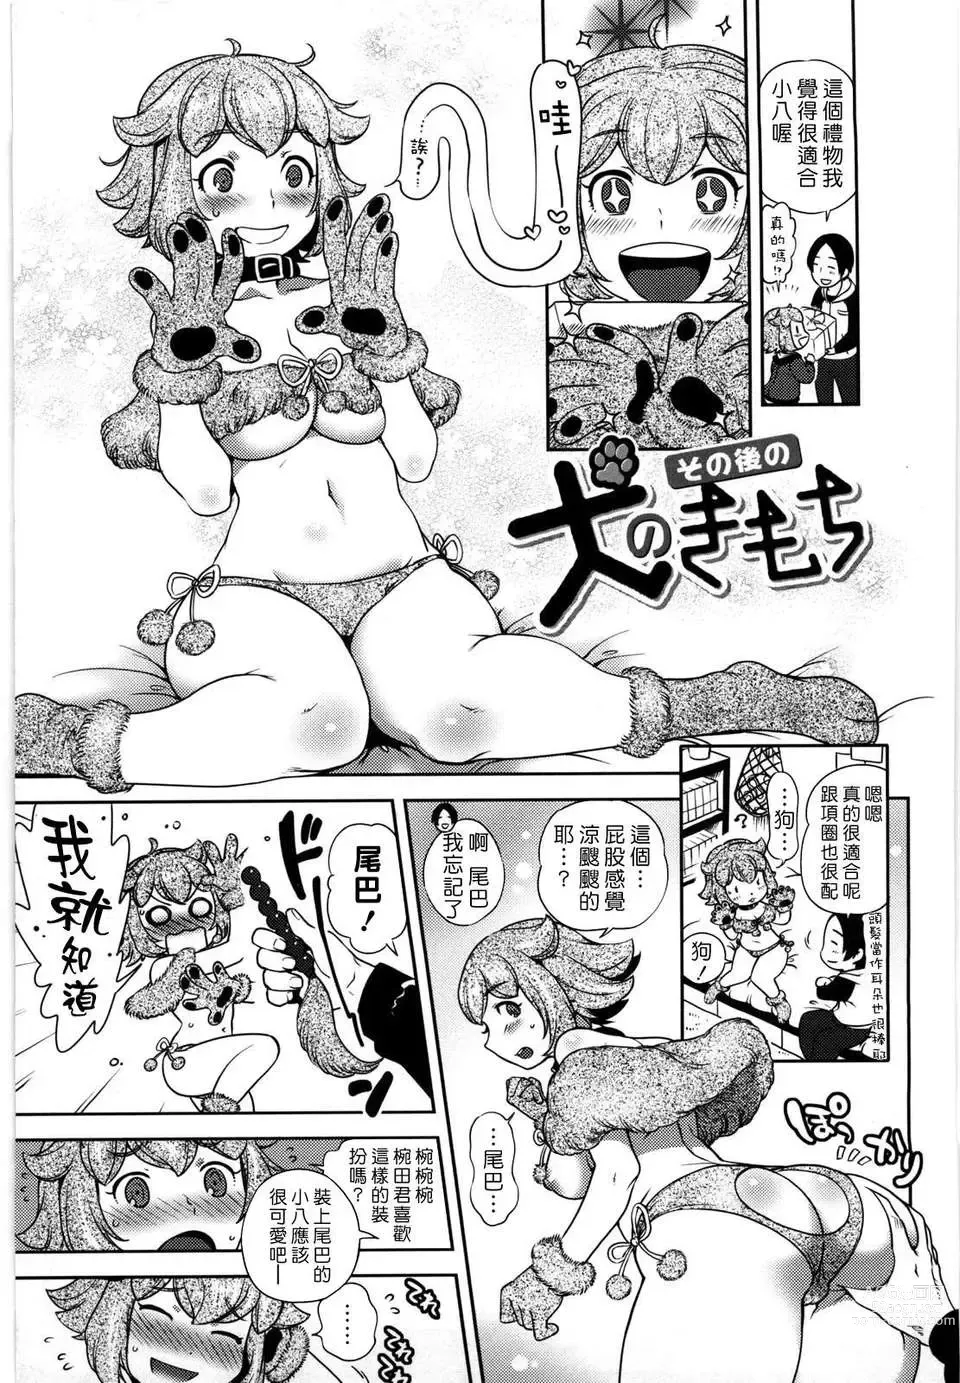 Page 215 of manga Koibito Rule